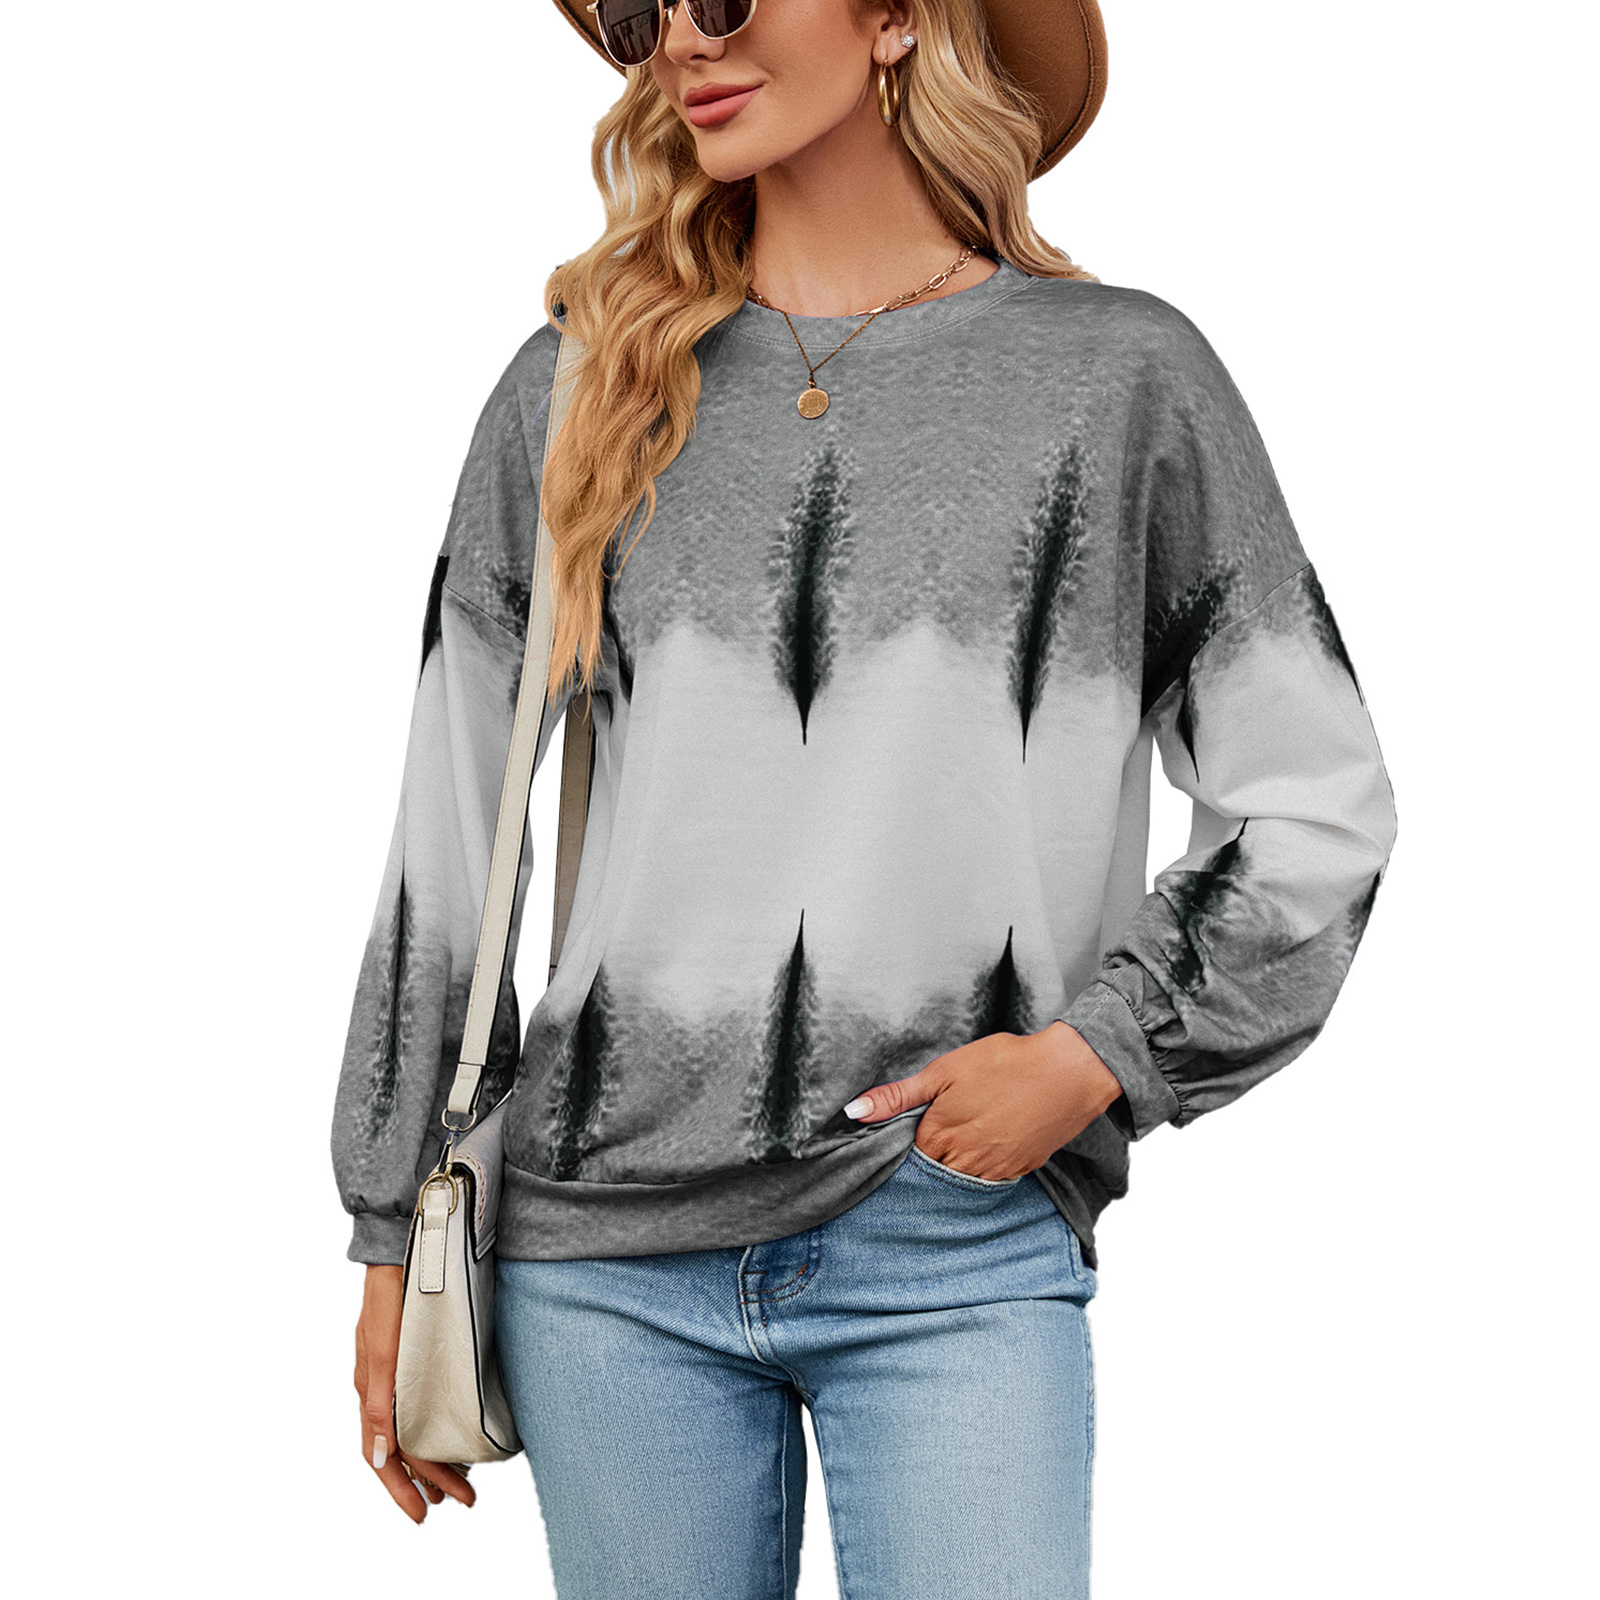 Women Sweatshirt Long Sleeve Round Neck Pullovers Trendy Contrast Color Tie Dye Loose Casual Tops grey L